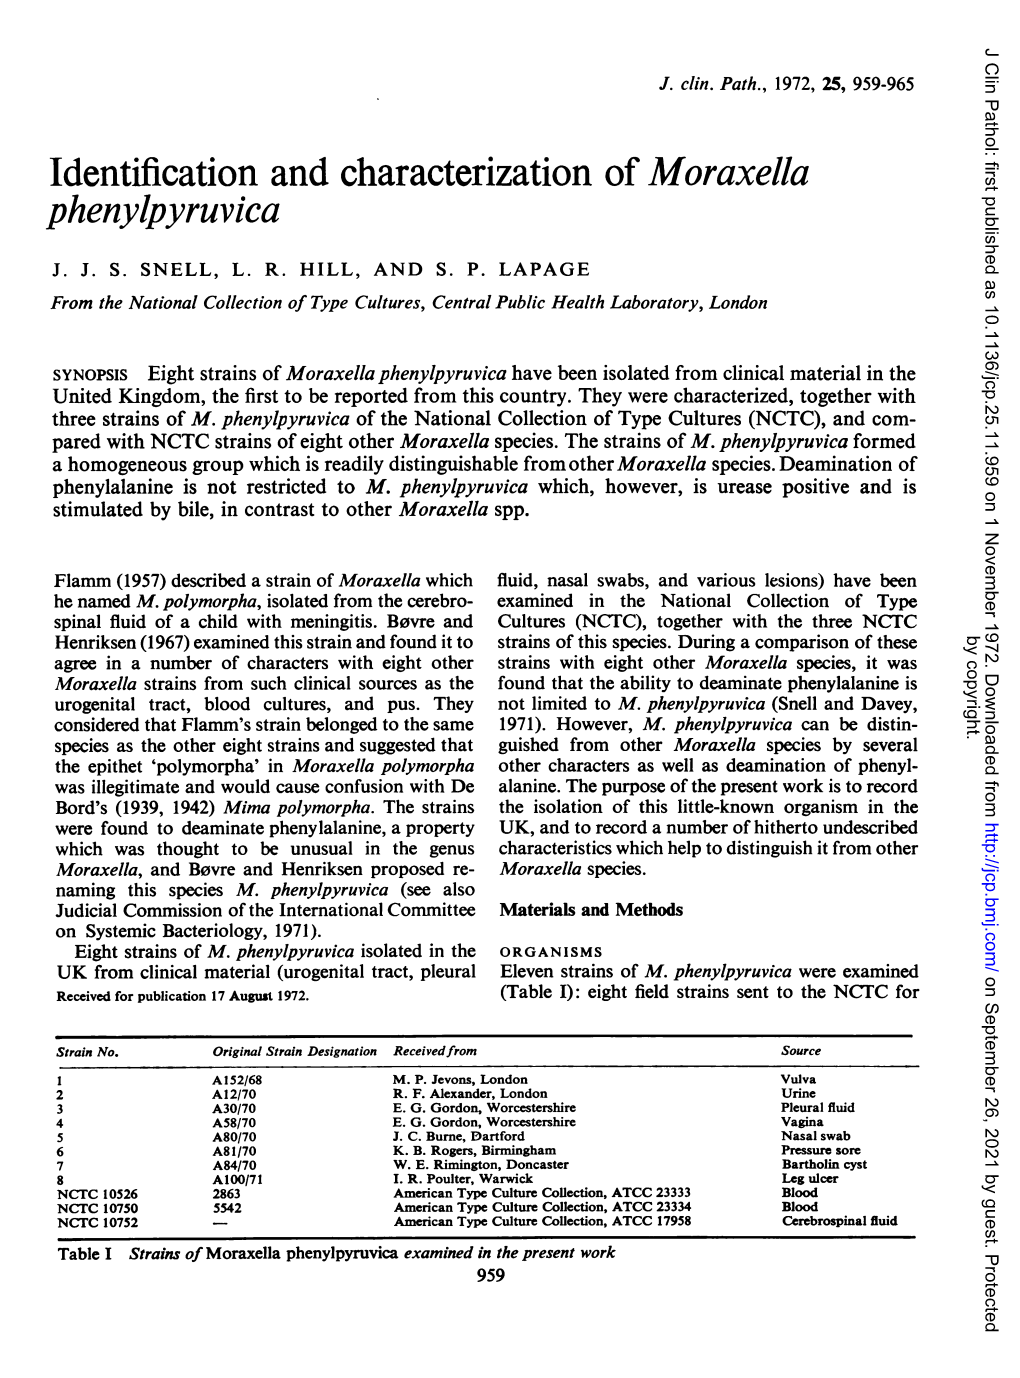 Identification and Characterization of Moraxella Phenylpyruvica